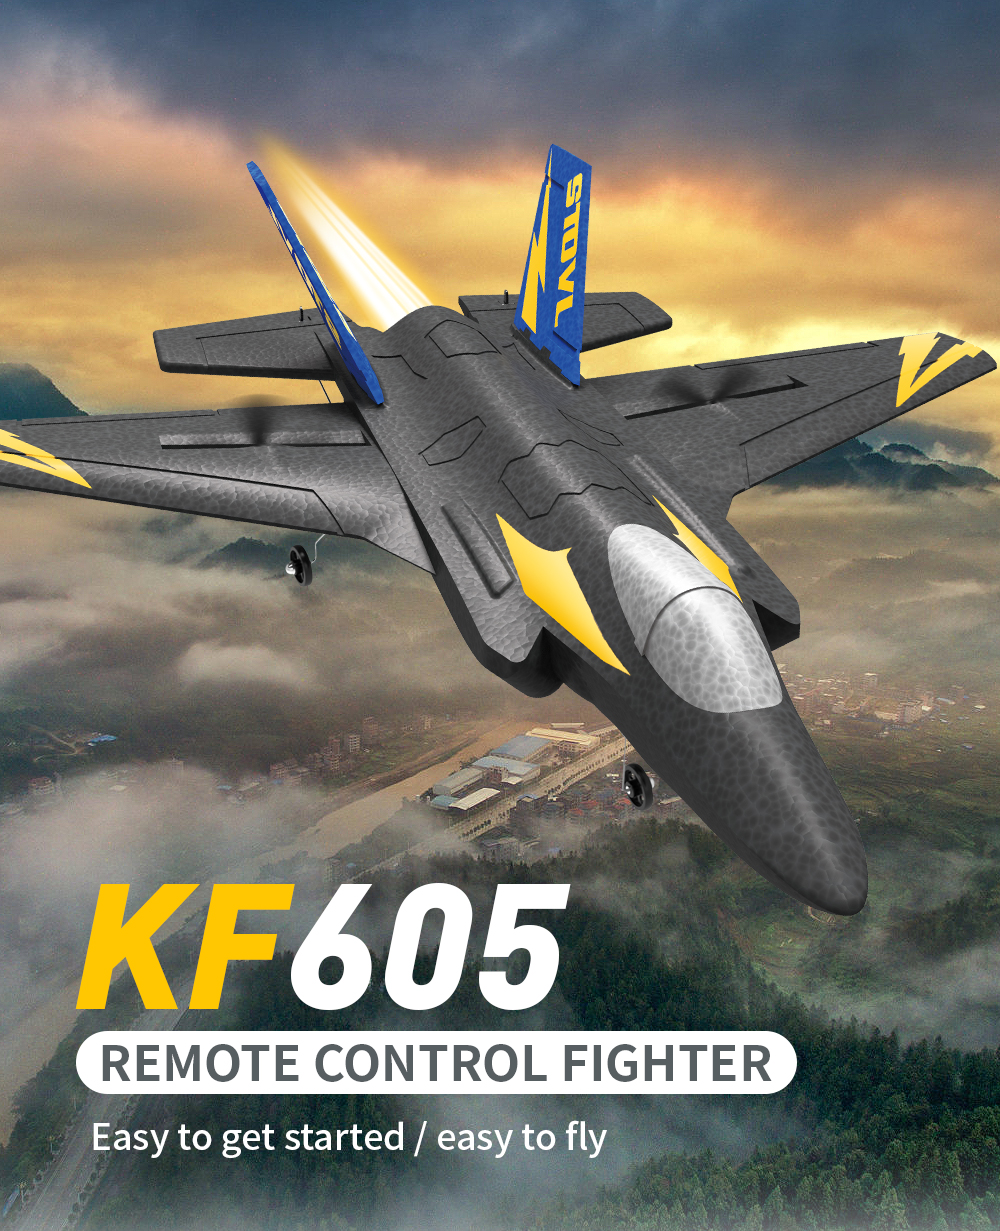 KFPLANE-KF605-F35-Fighter-24G-4CH-6-Axis-Gyroscope-Automatic-Balance-360deg-Rollover-EPP-RC-Glider-A-1845018-1